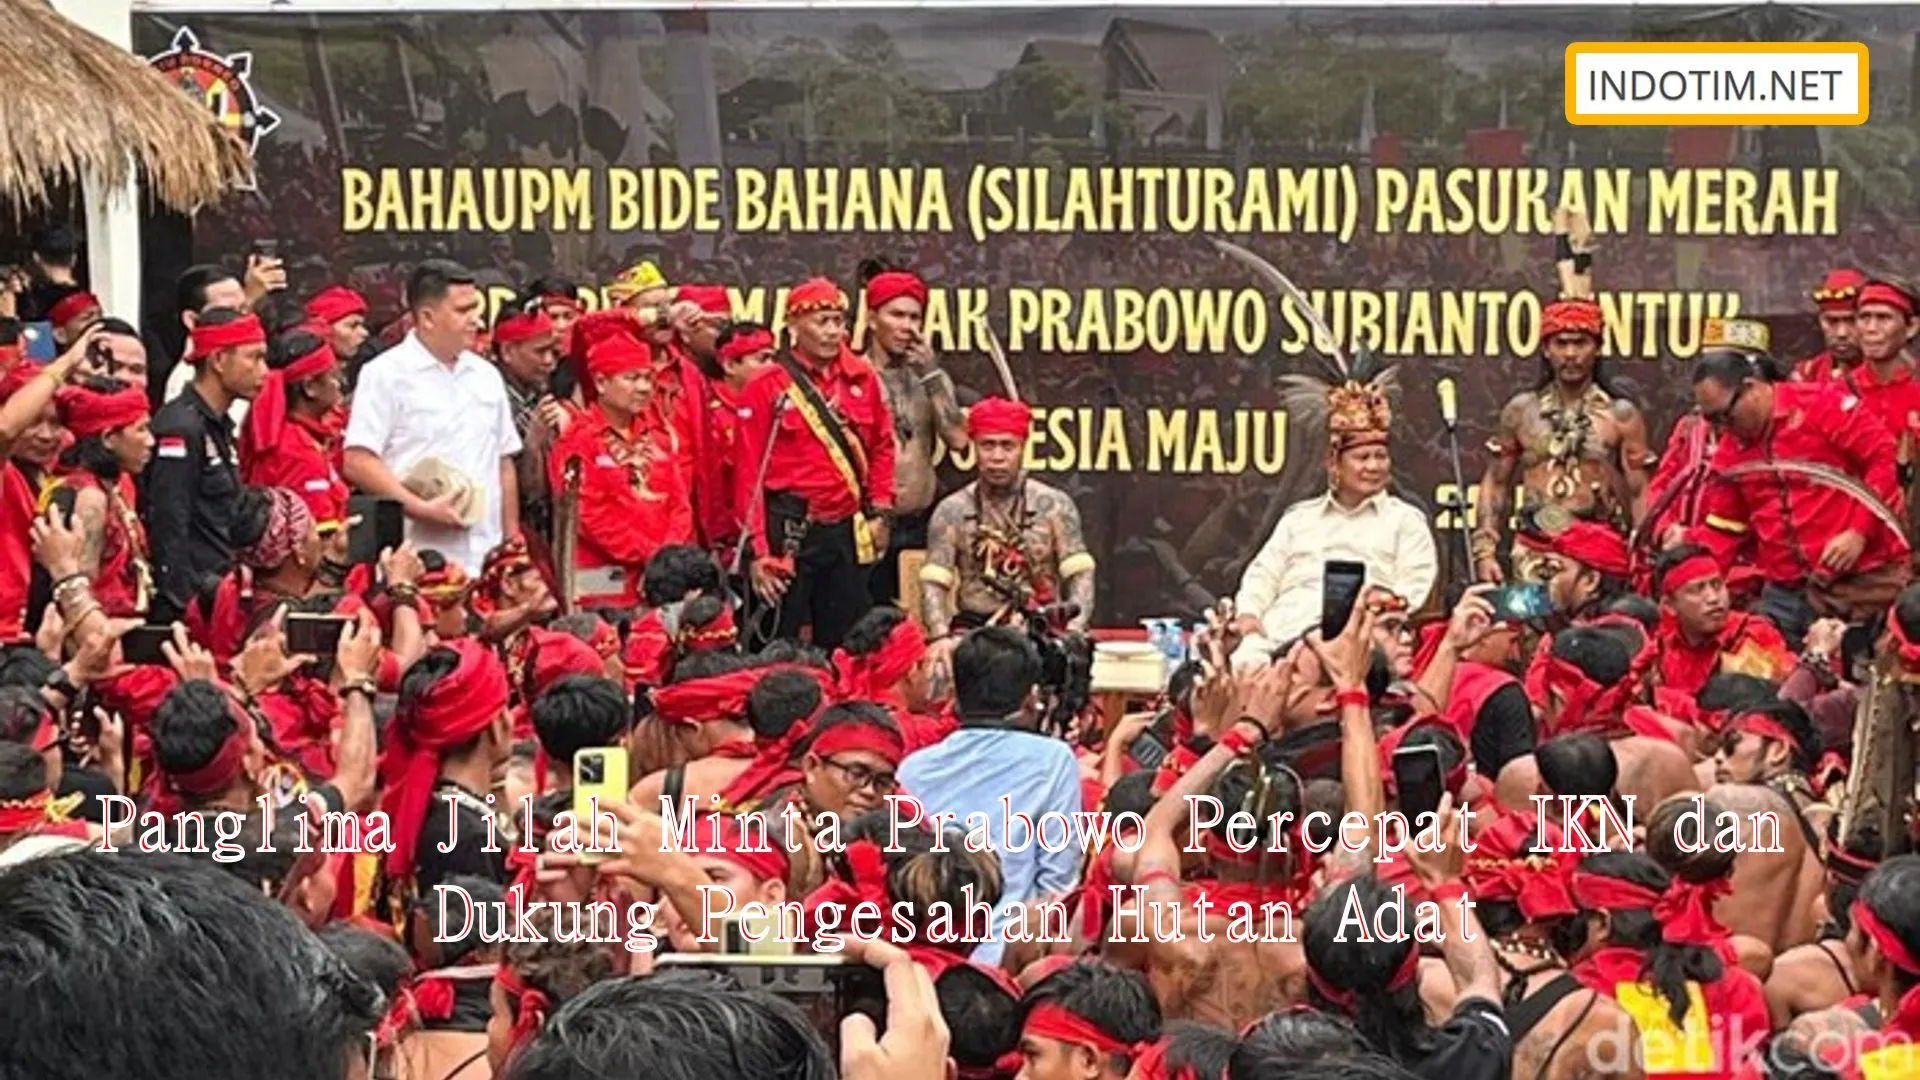 Panglima Jilah Minta Prabowo Percepat IKN dan Dukung Pengesahan Hutan Adat